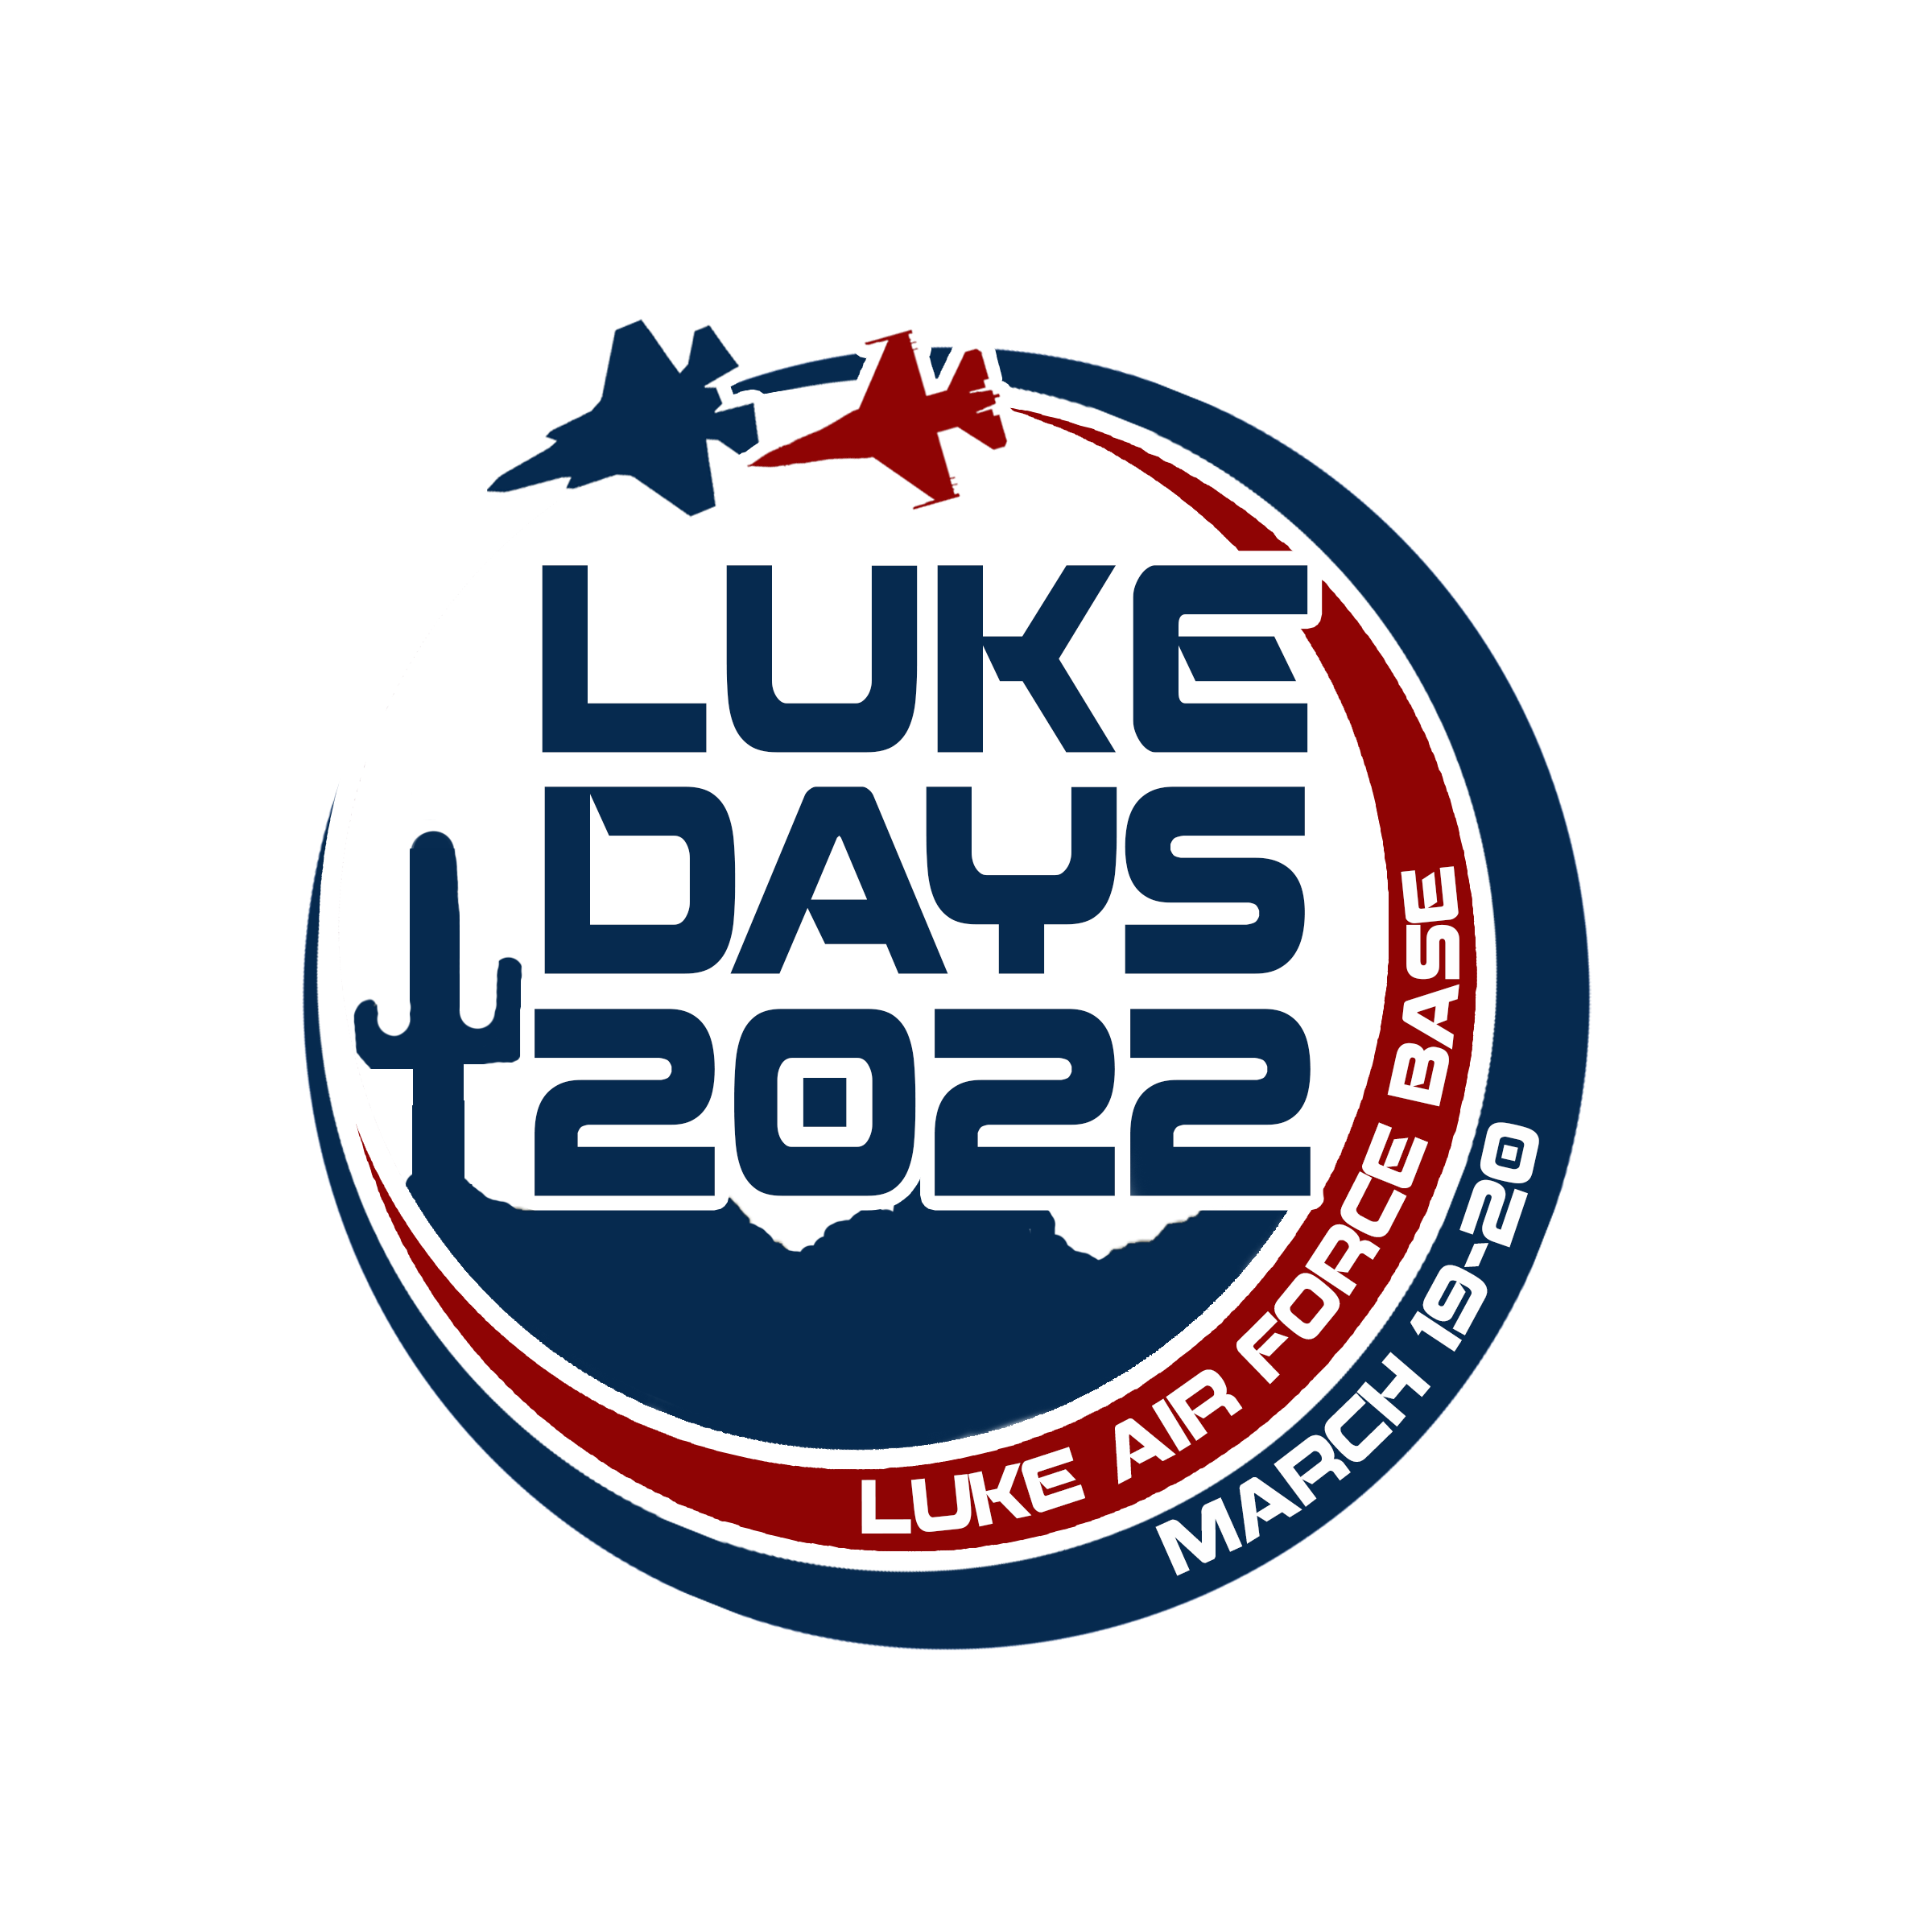 Luke Days 2022 Logo